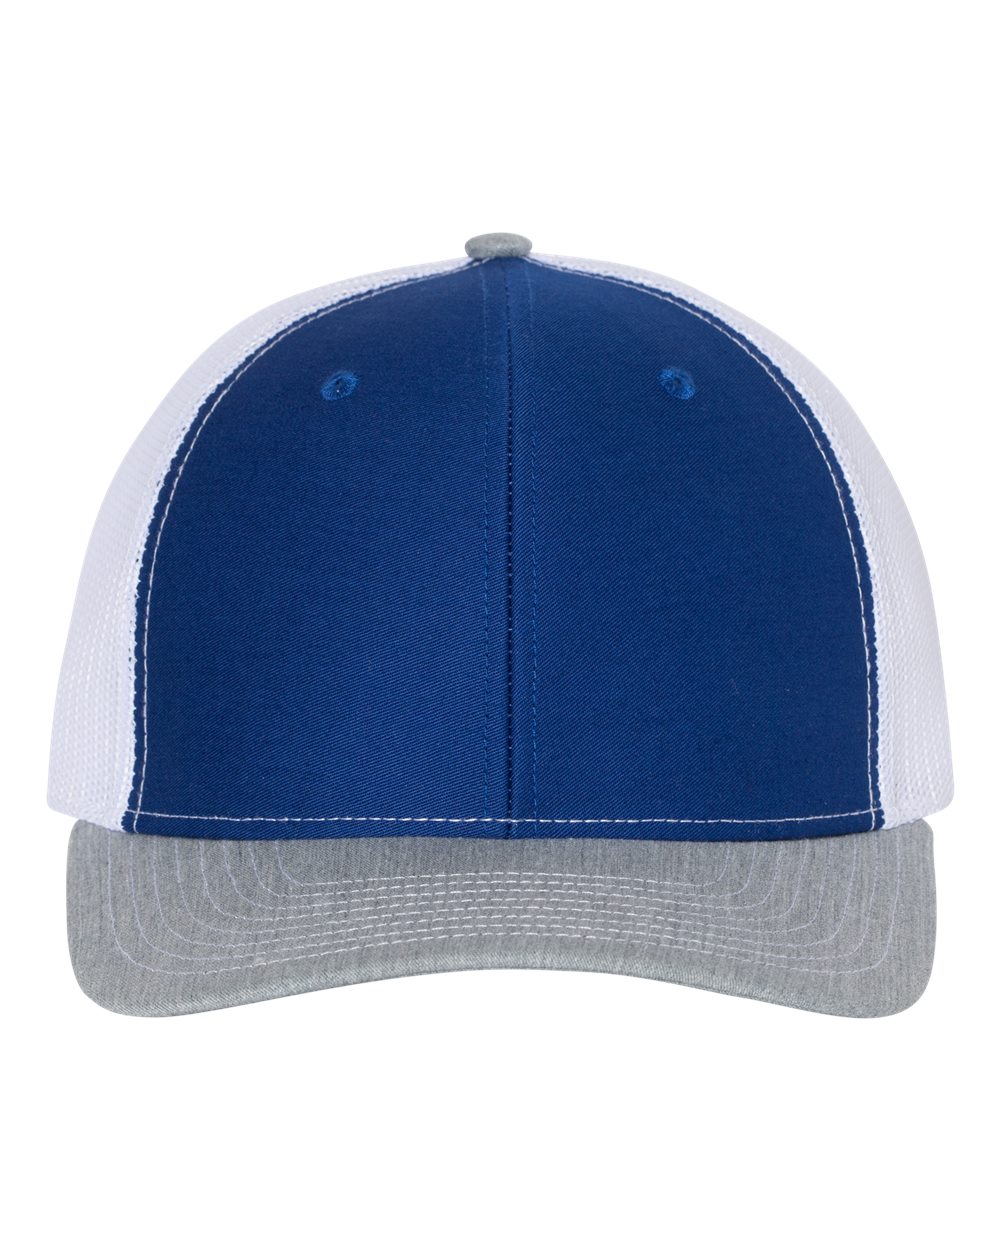 Richardson Snapback Trucker Hat (112) in Royal/White/Heather Grey